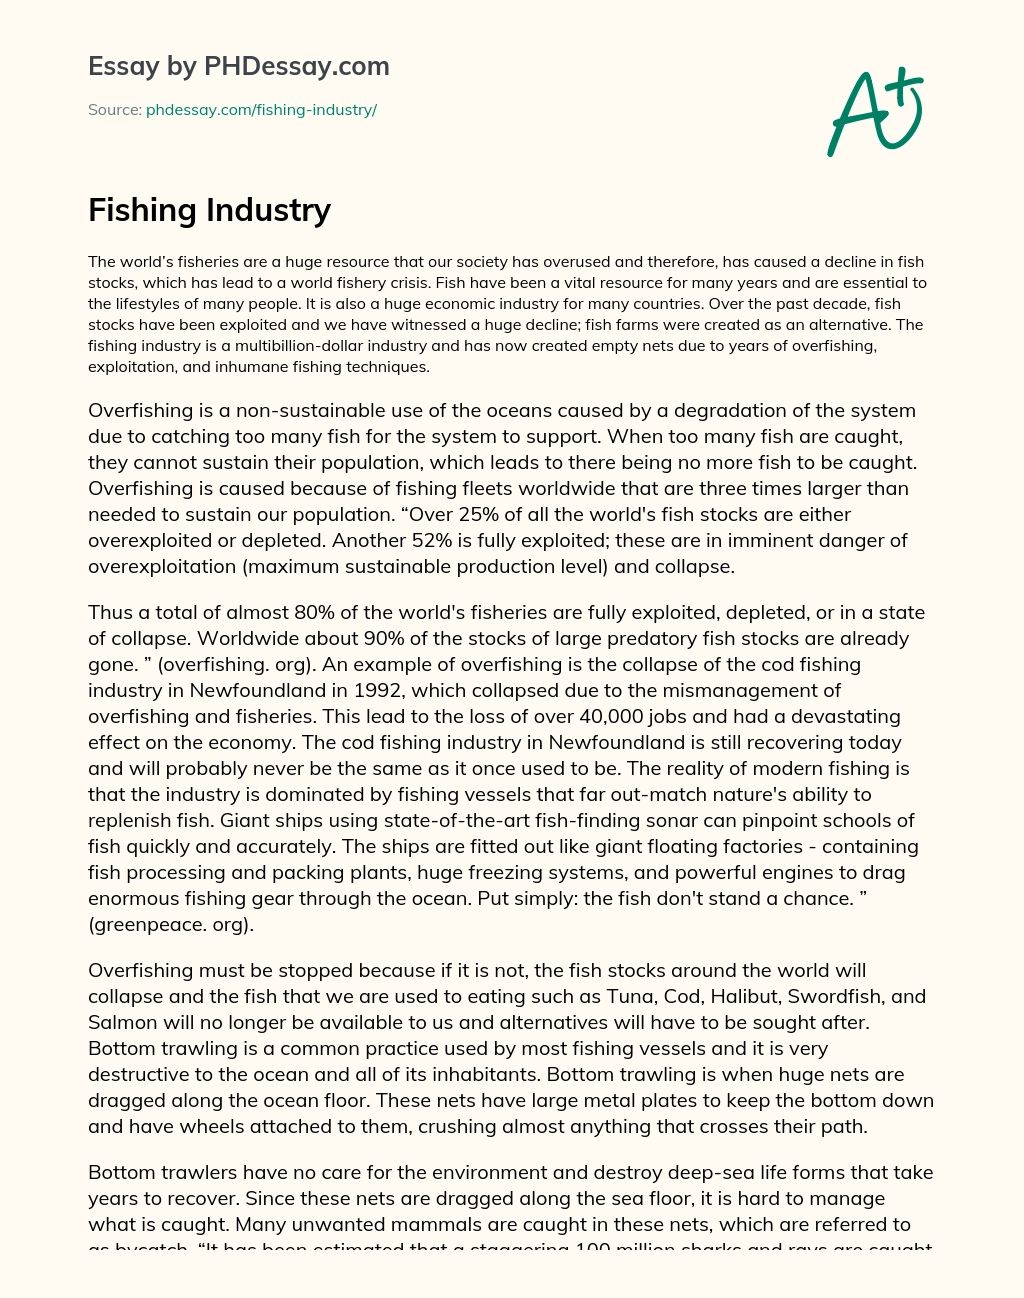 Fishing Industry essay